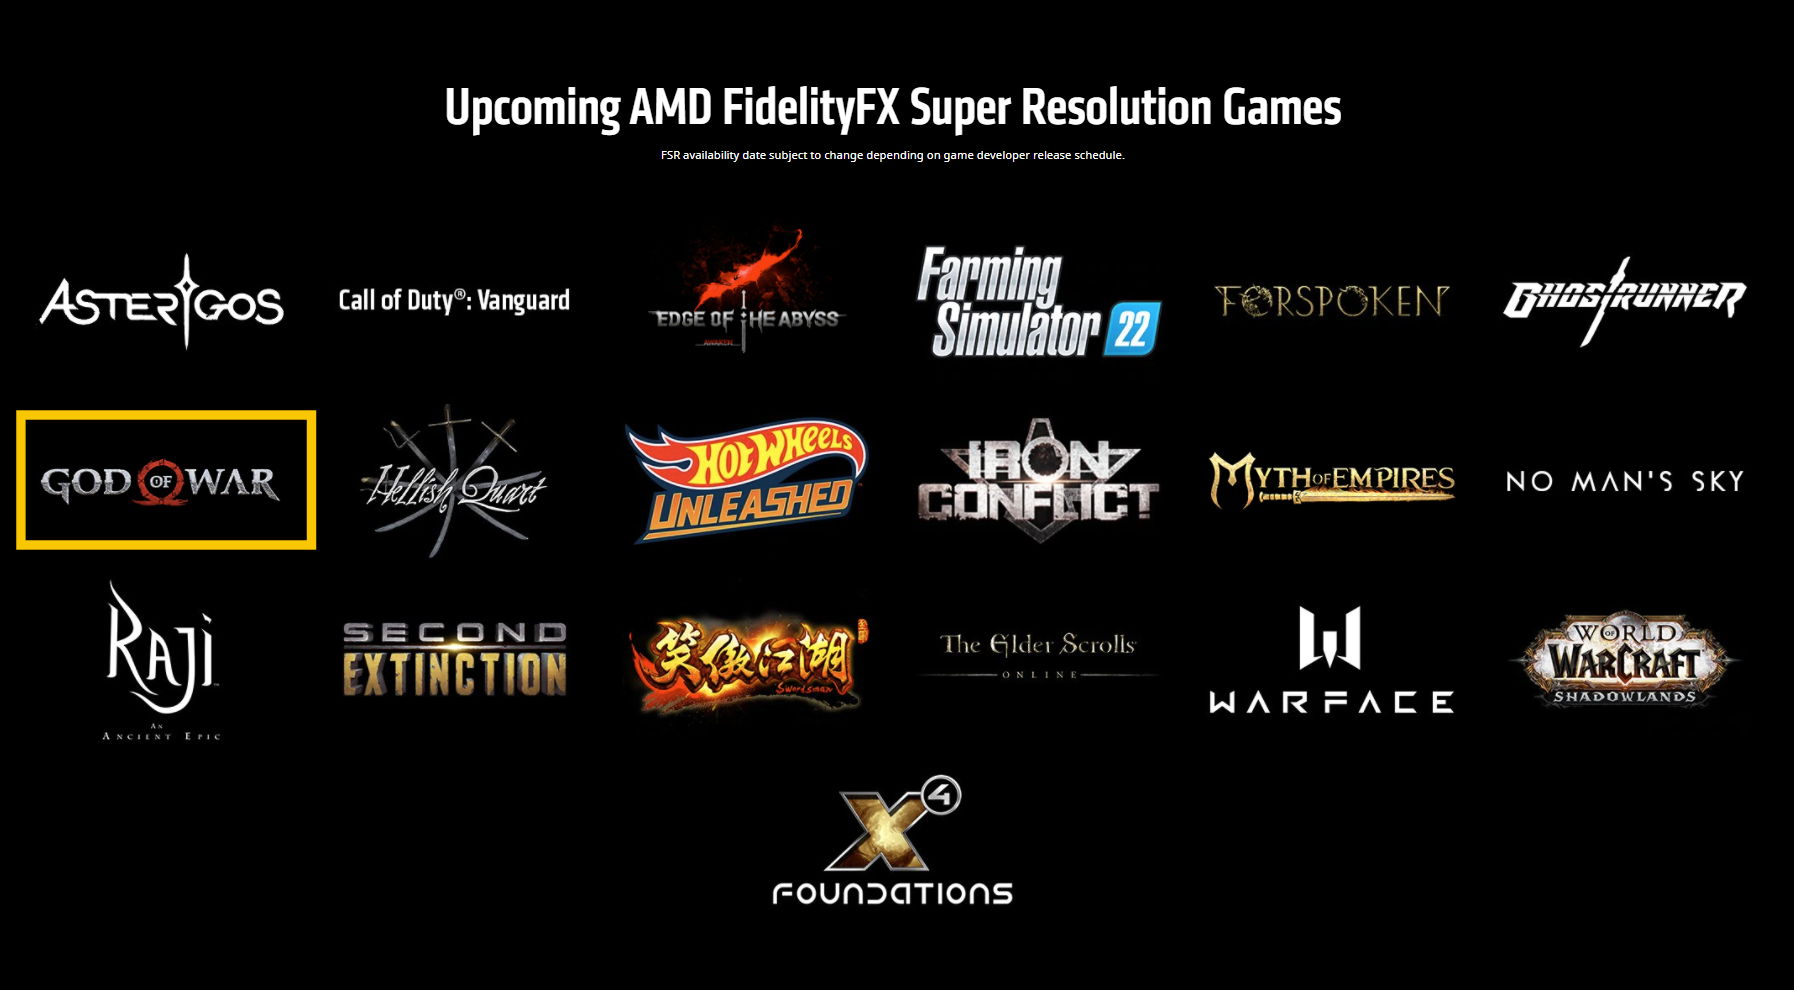 God of War на PC получит поддержку AMD FidelityFX Super Resolution